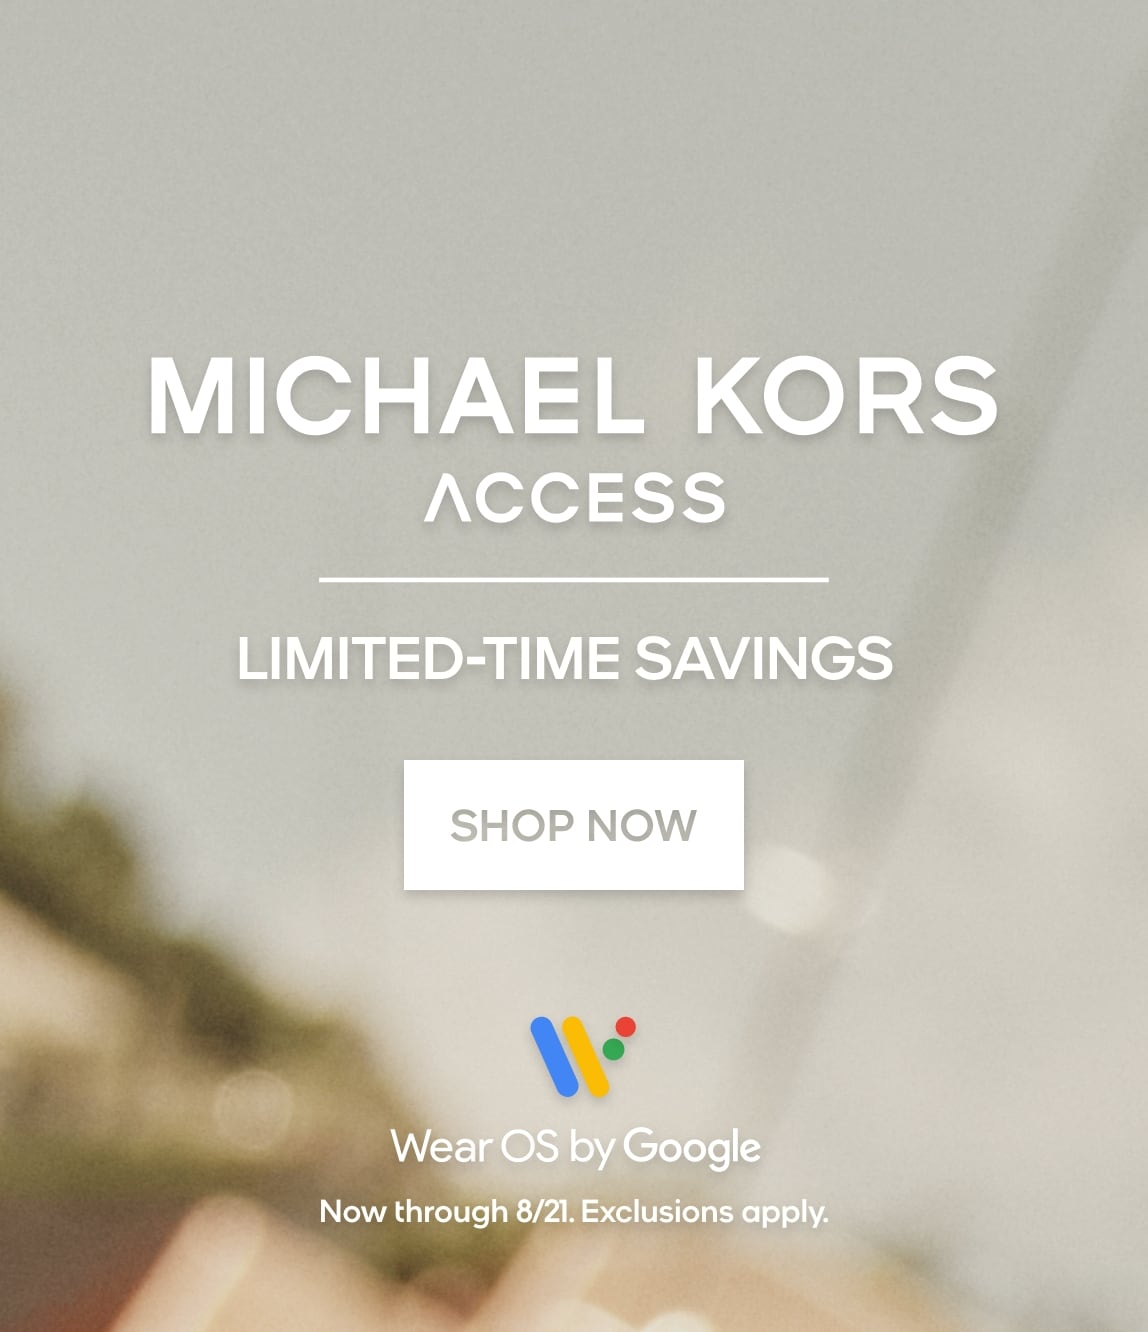 Michael Kors Access Limited-Time Savings